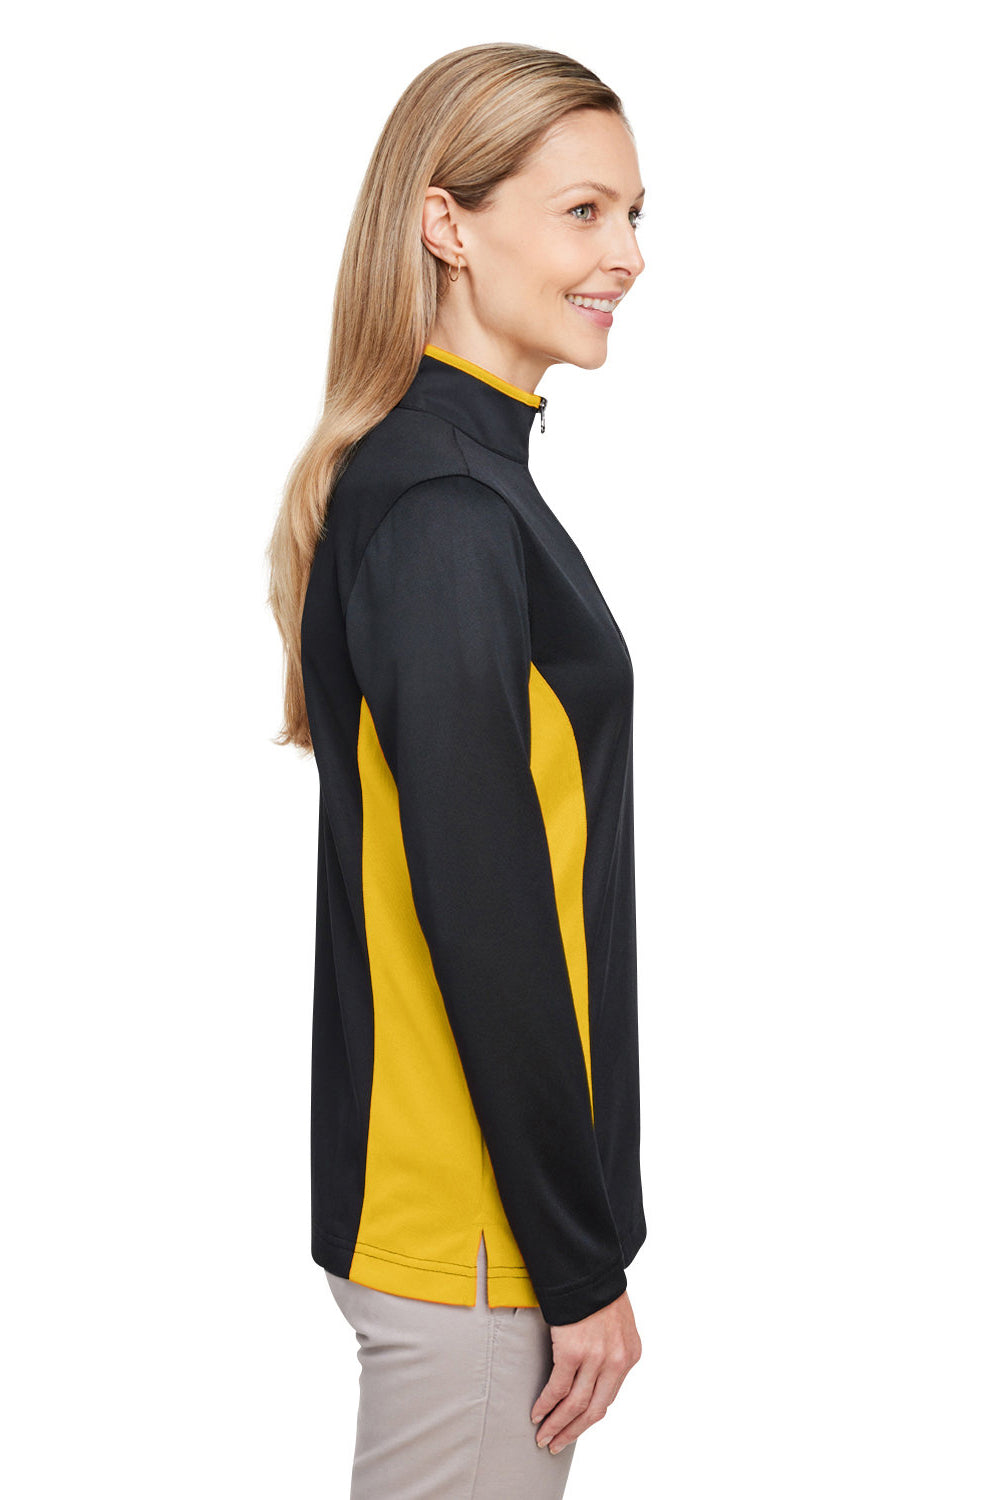 Harriton M786W Womens Flash Performance Moisture Wicking Colorblock 1/4 Zip Sweatshirt Black/Sunray Yellow Side